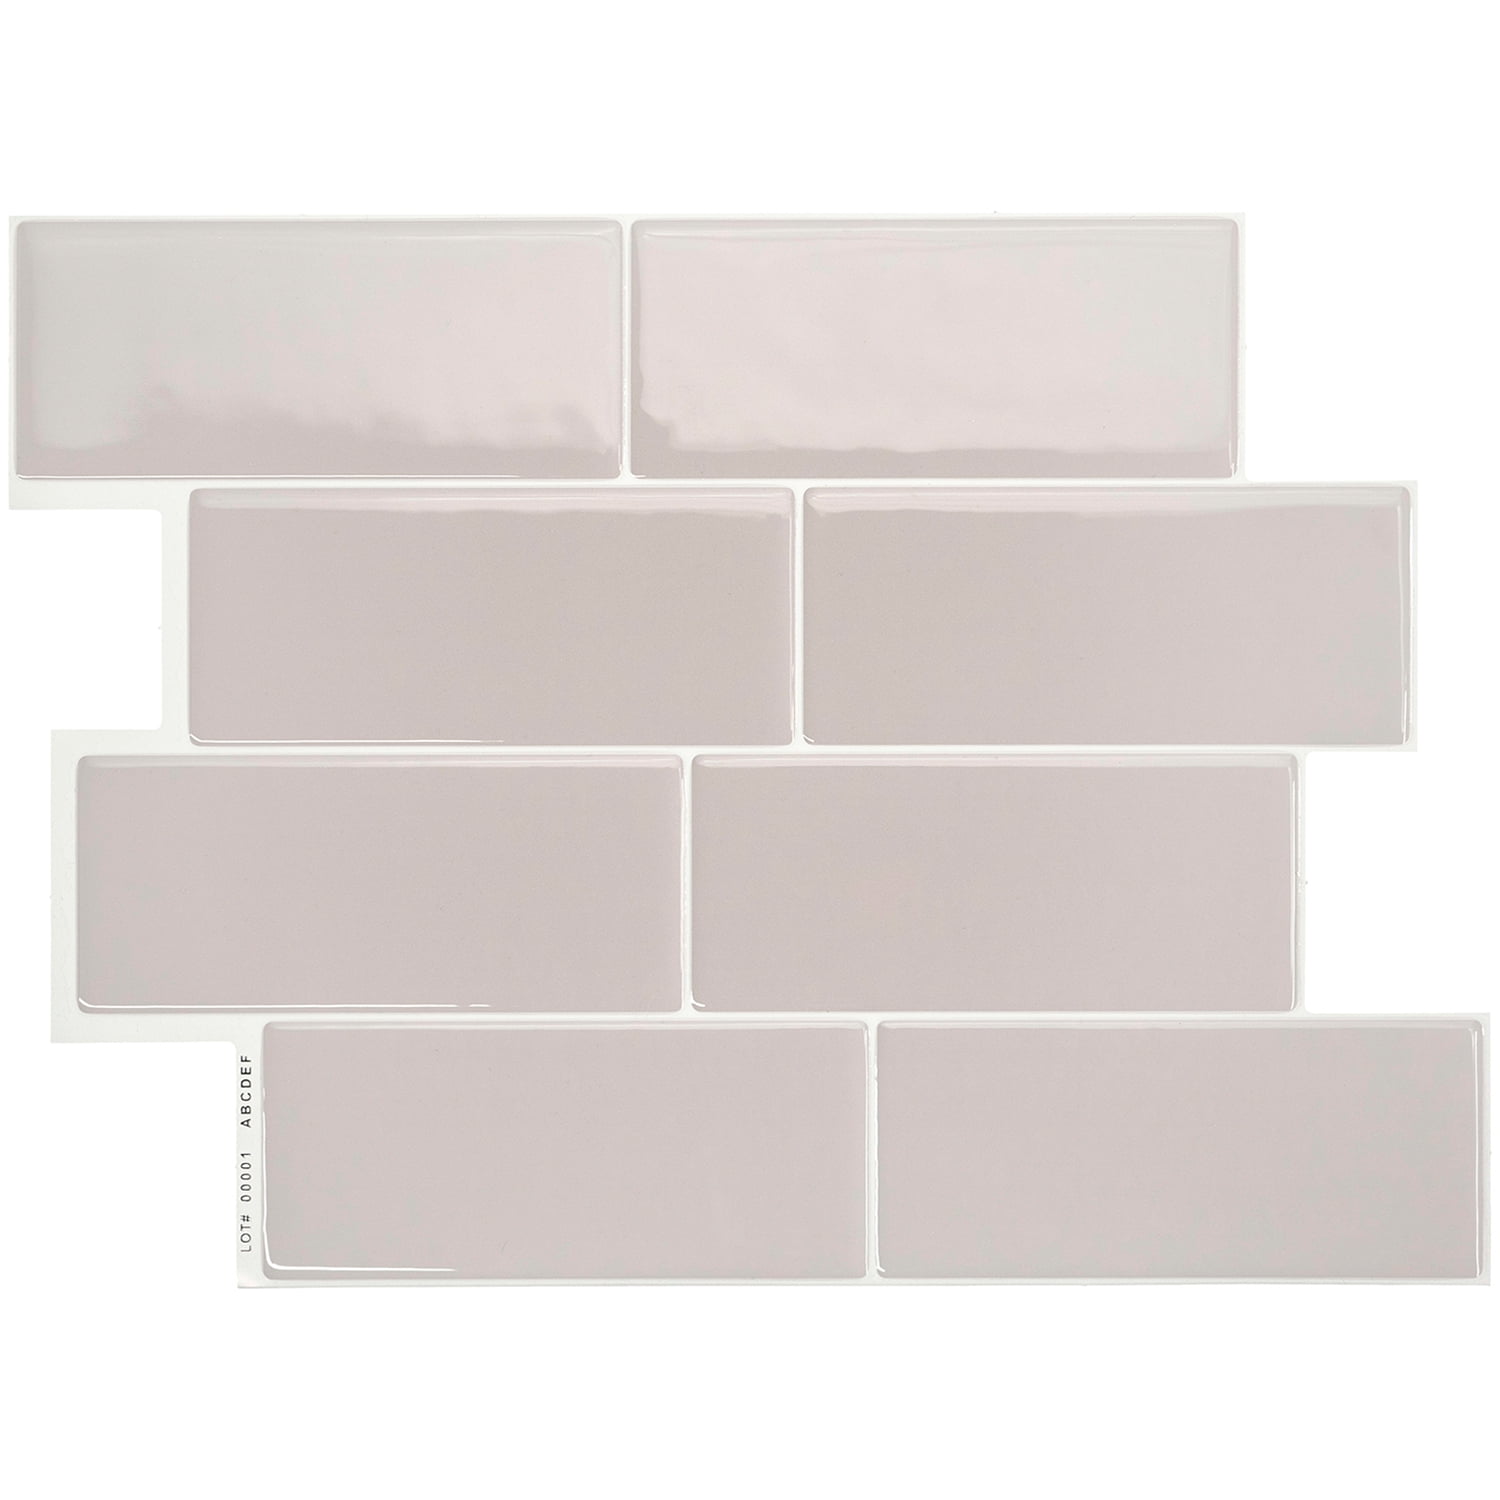 SMART TILES Peel and Stick Backsplash - 5 Sheets of 11.43 x 9